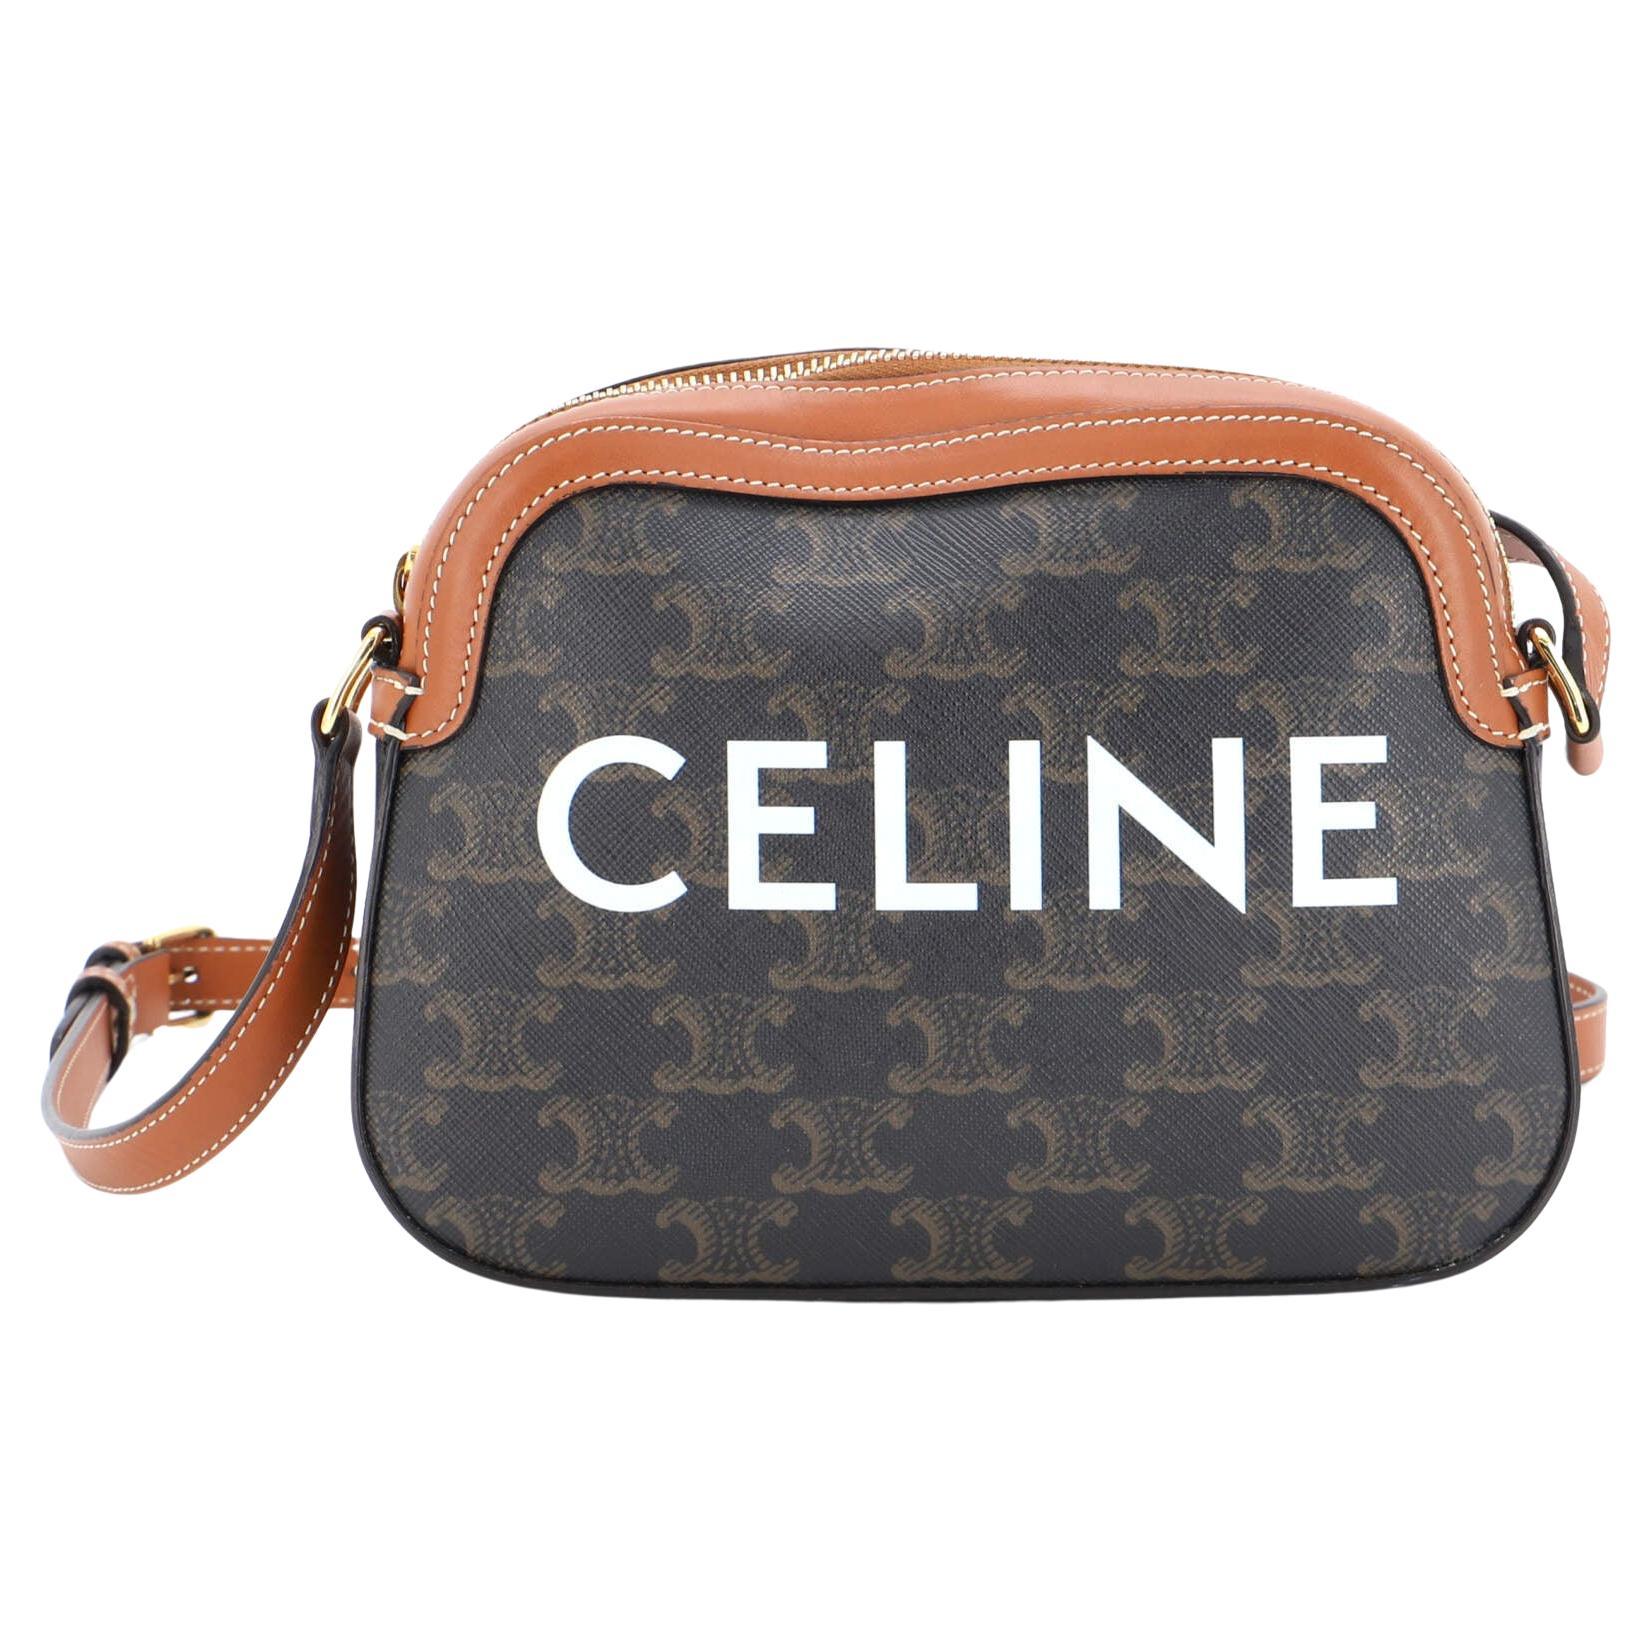 Celine retro logo handle bag in vinyl For Sale at 1stDibs